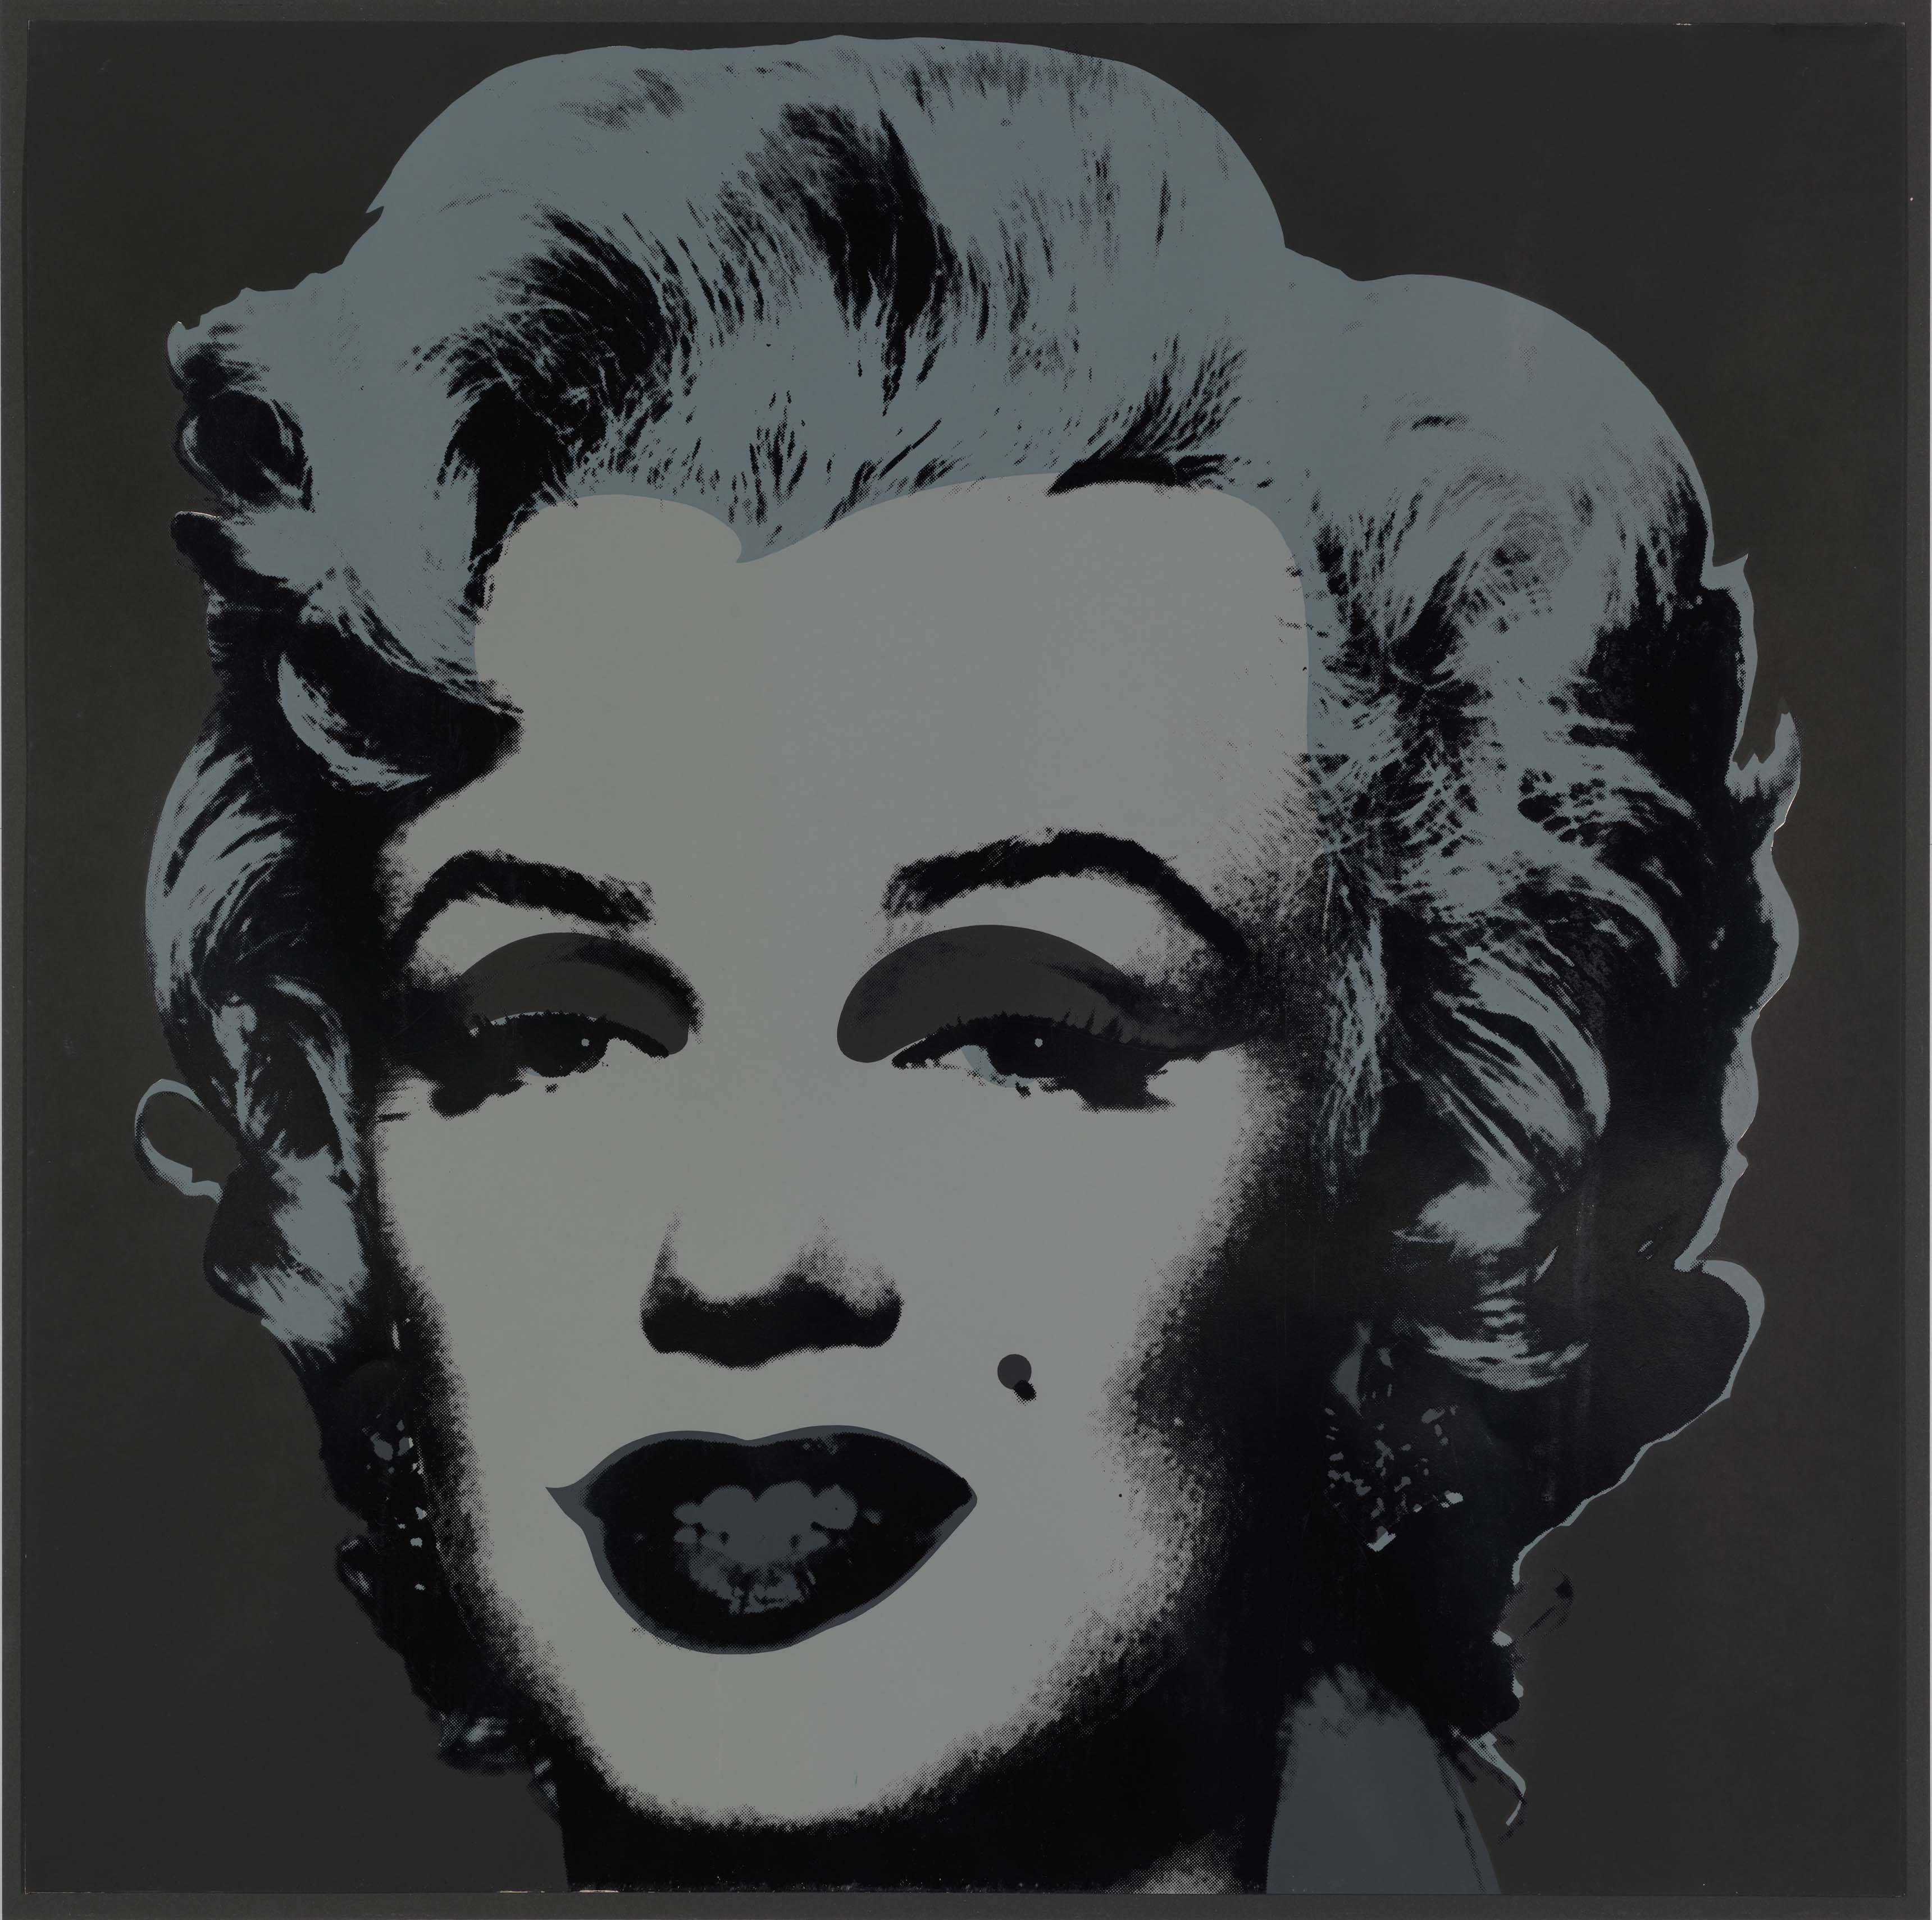 Andy Warhol, Marilyn, 1967, du portfolio Marilyn, 1967, sérigraphie, 91,4 × 91,4 cm, acquisition © Adagp, Paris, 2017